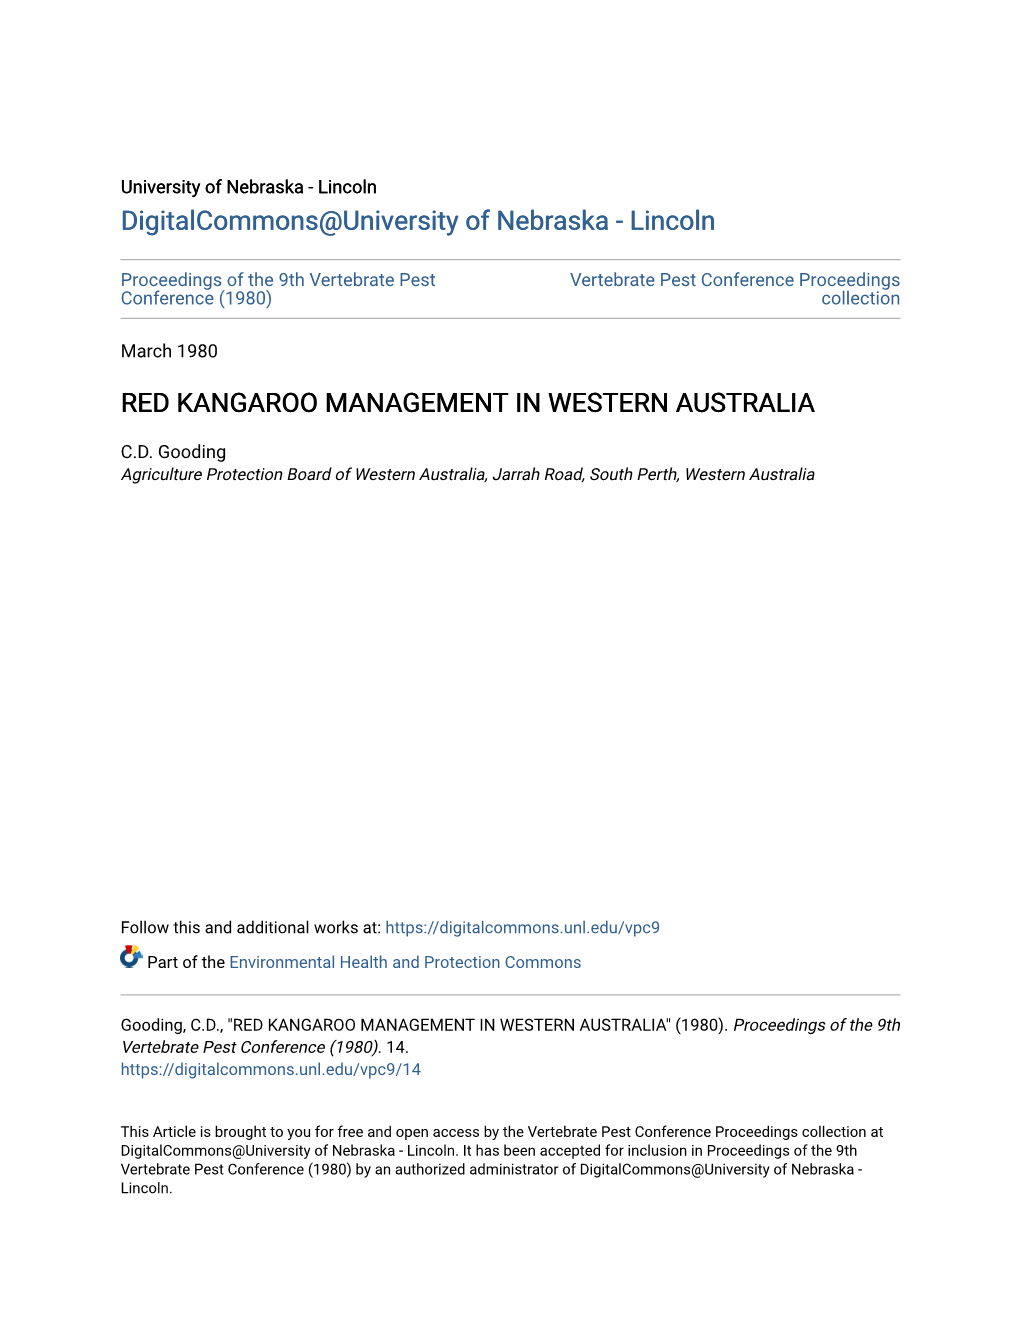 Red Kangaroo Management in Western Australia